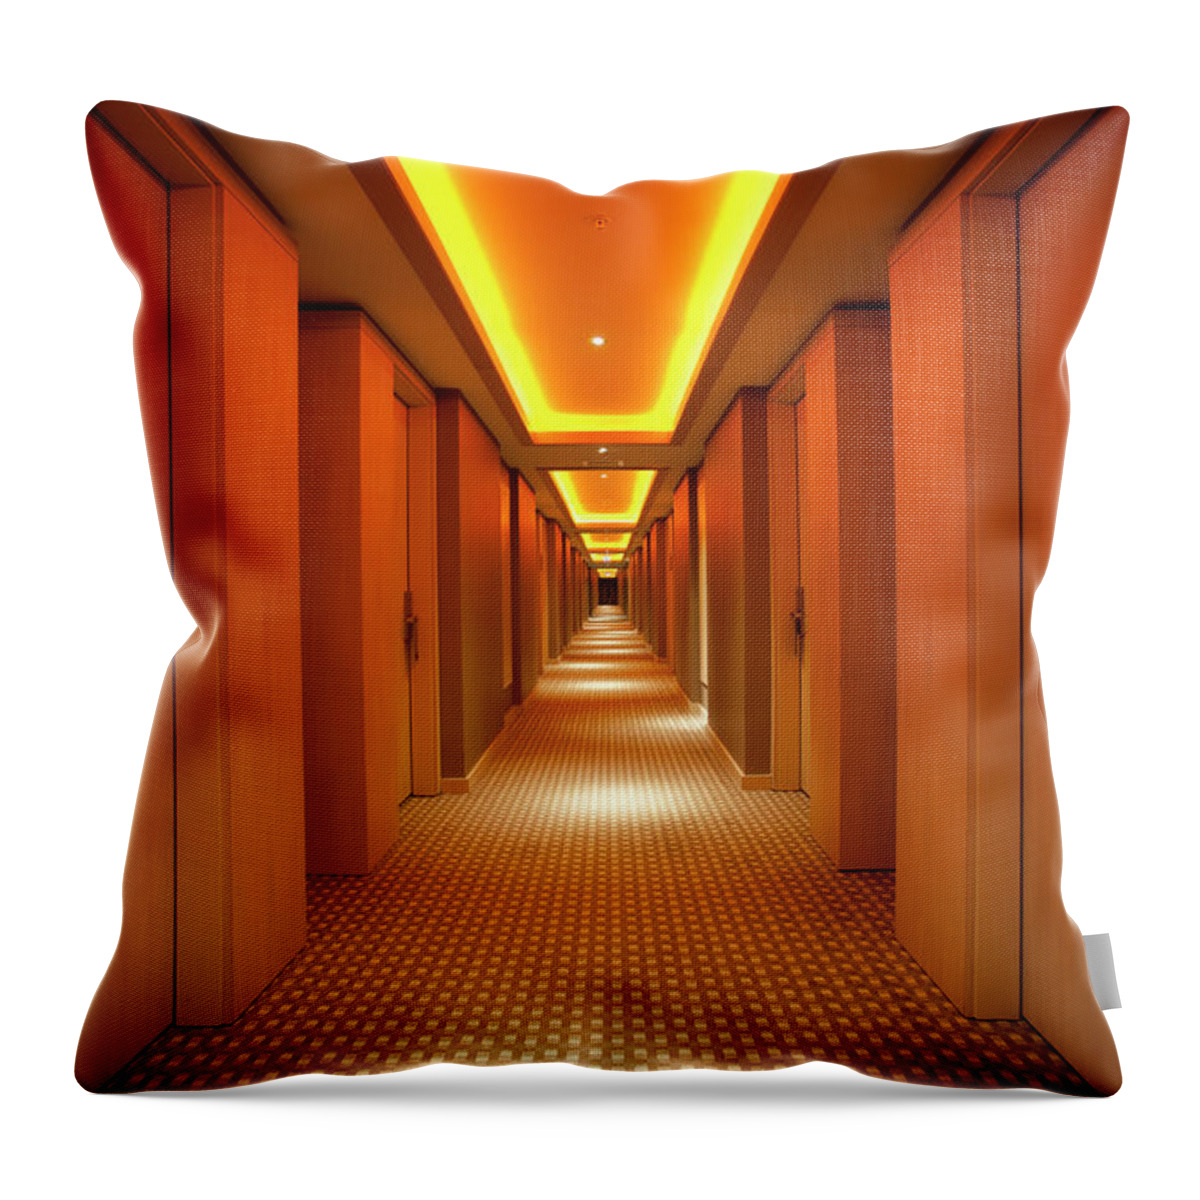 Long Throw Pillow featuring the photograph Long, Narrow Corridor With Retro Themed by Dogayusufdokdok